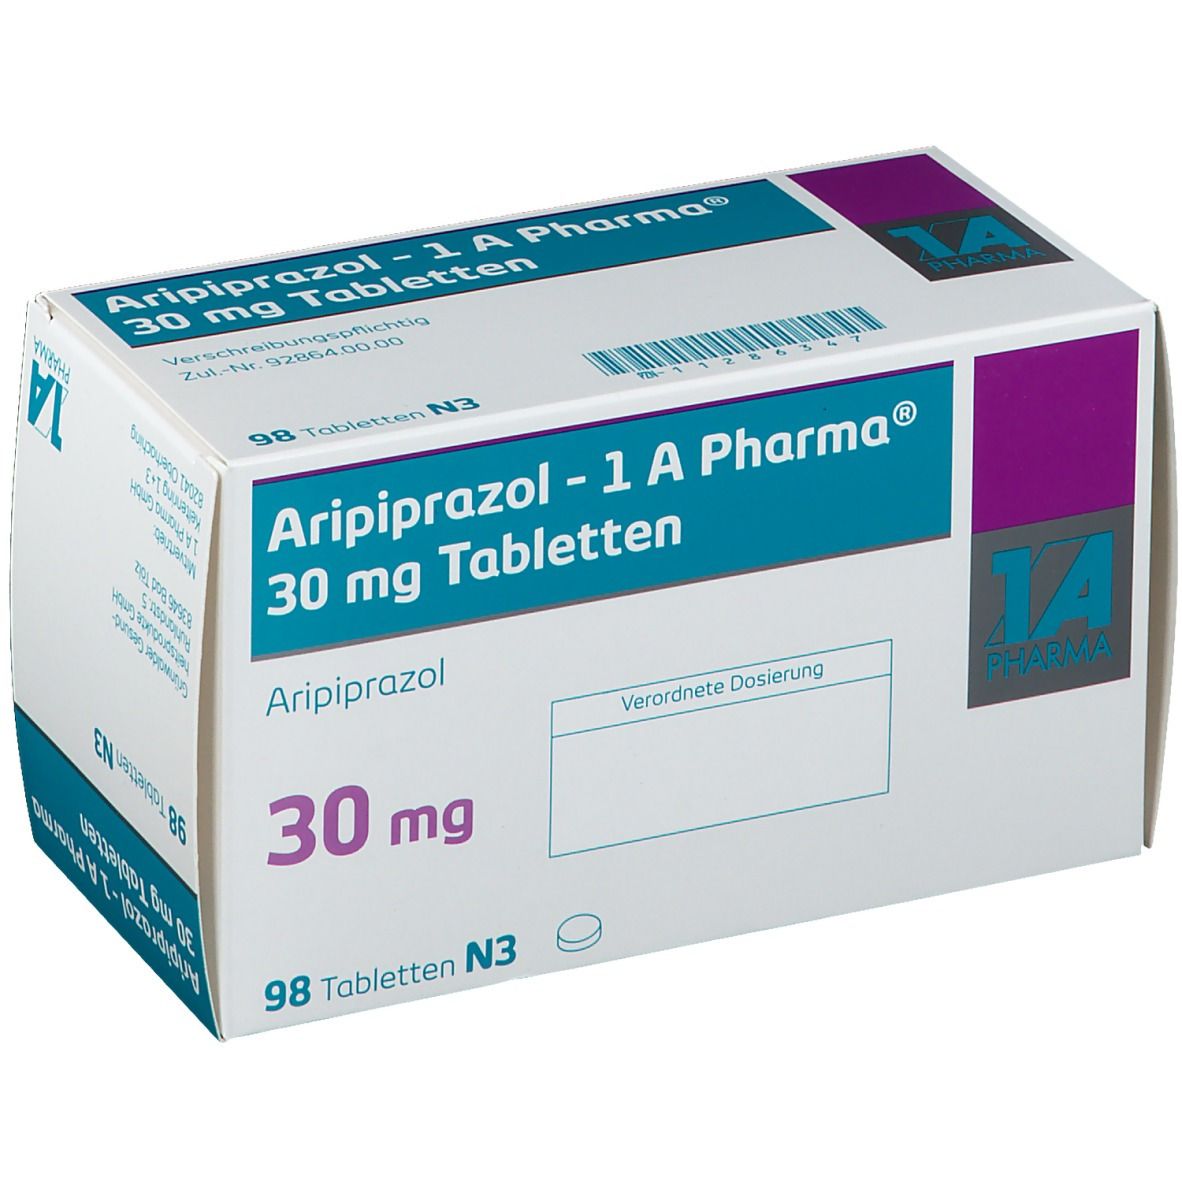 Aripiprazol - 1 A Pharma® 30 mg